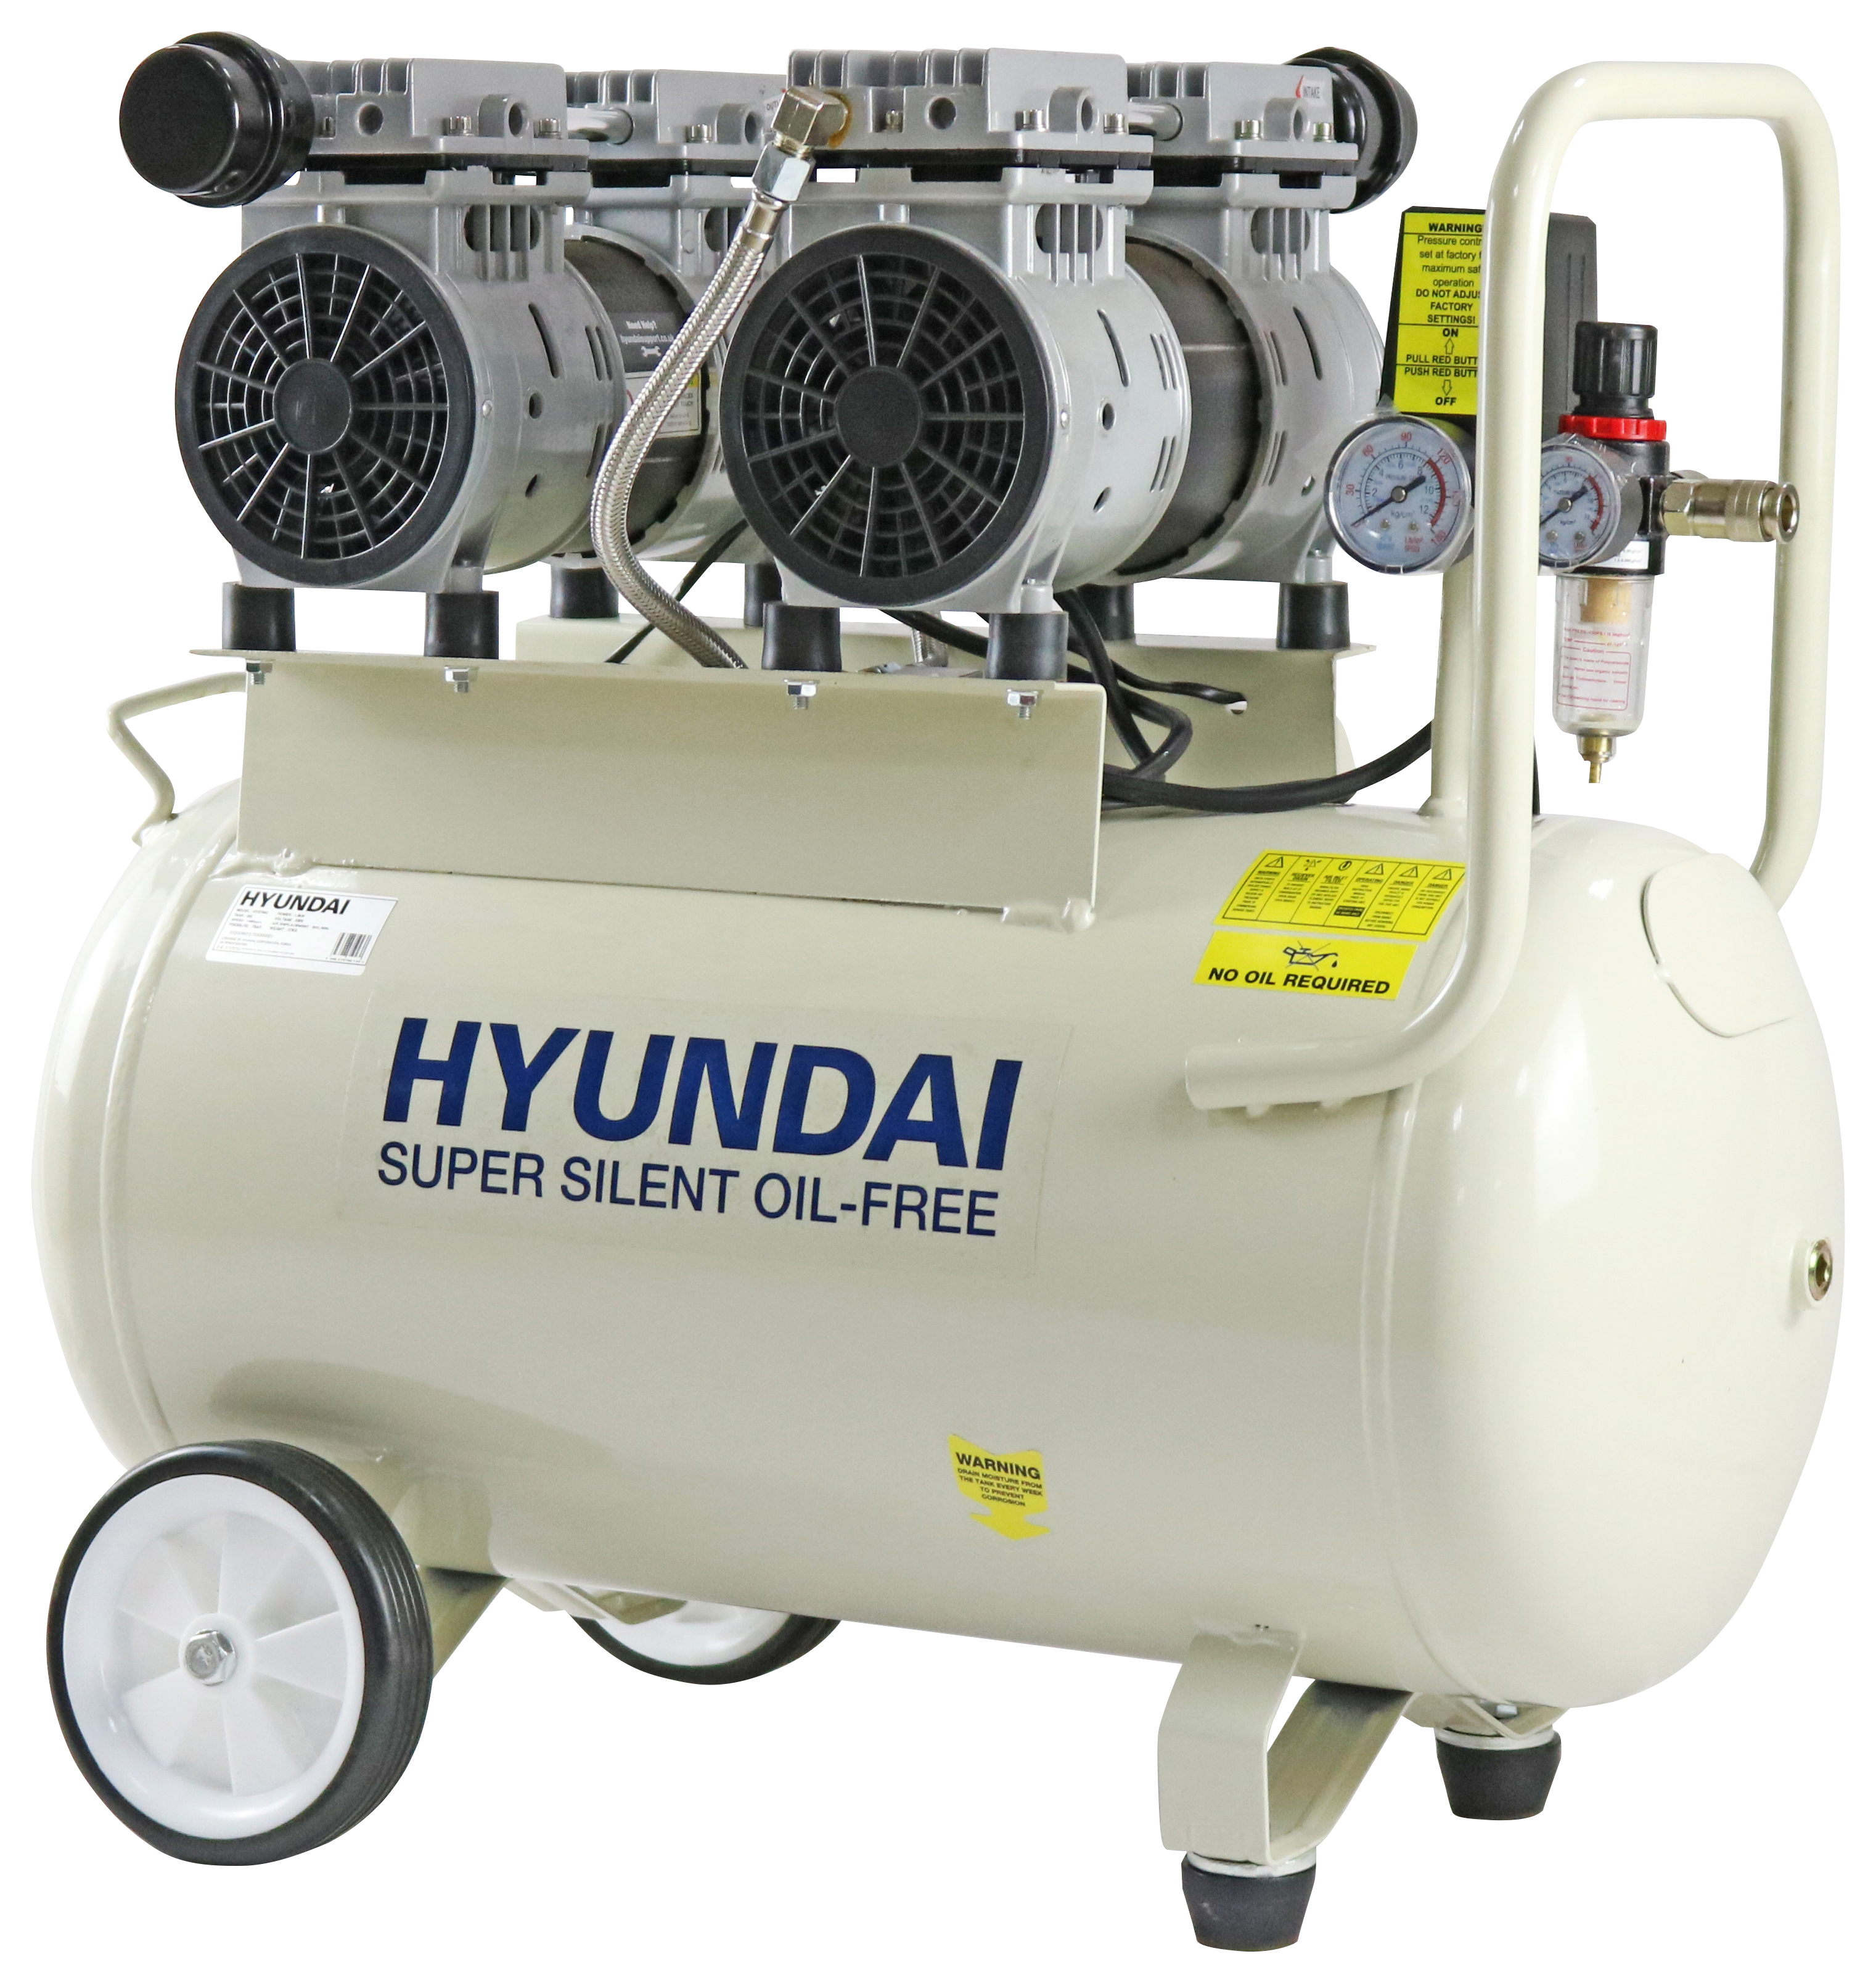 Hyundai HY27550 50L OIL-FREE Low Noise Air Compressor - 1500W